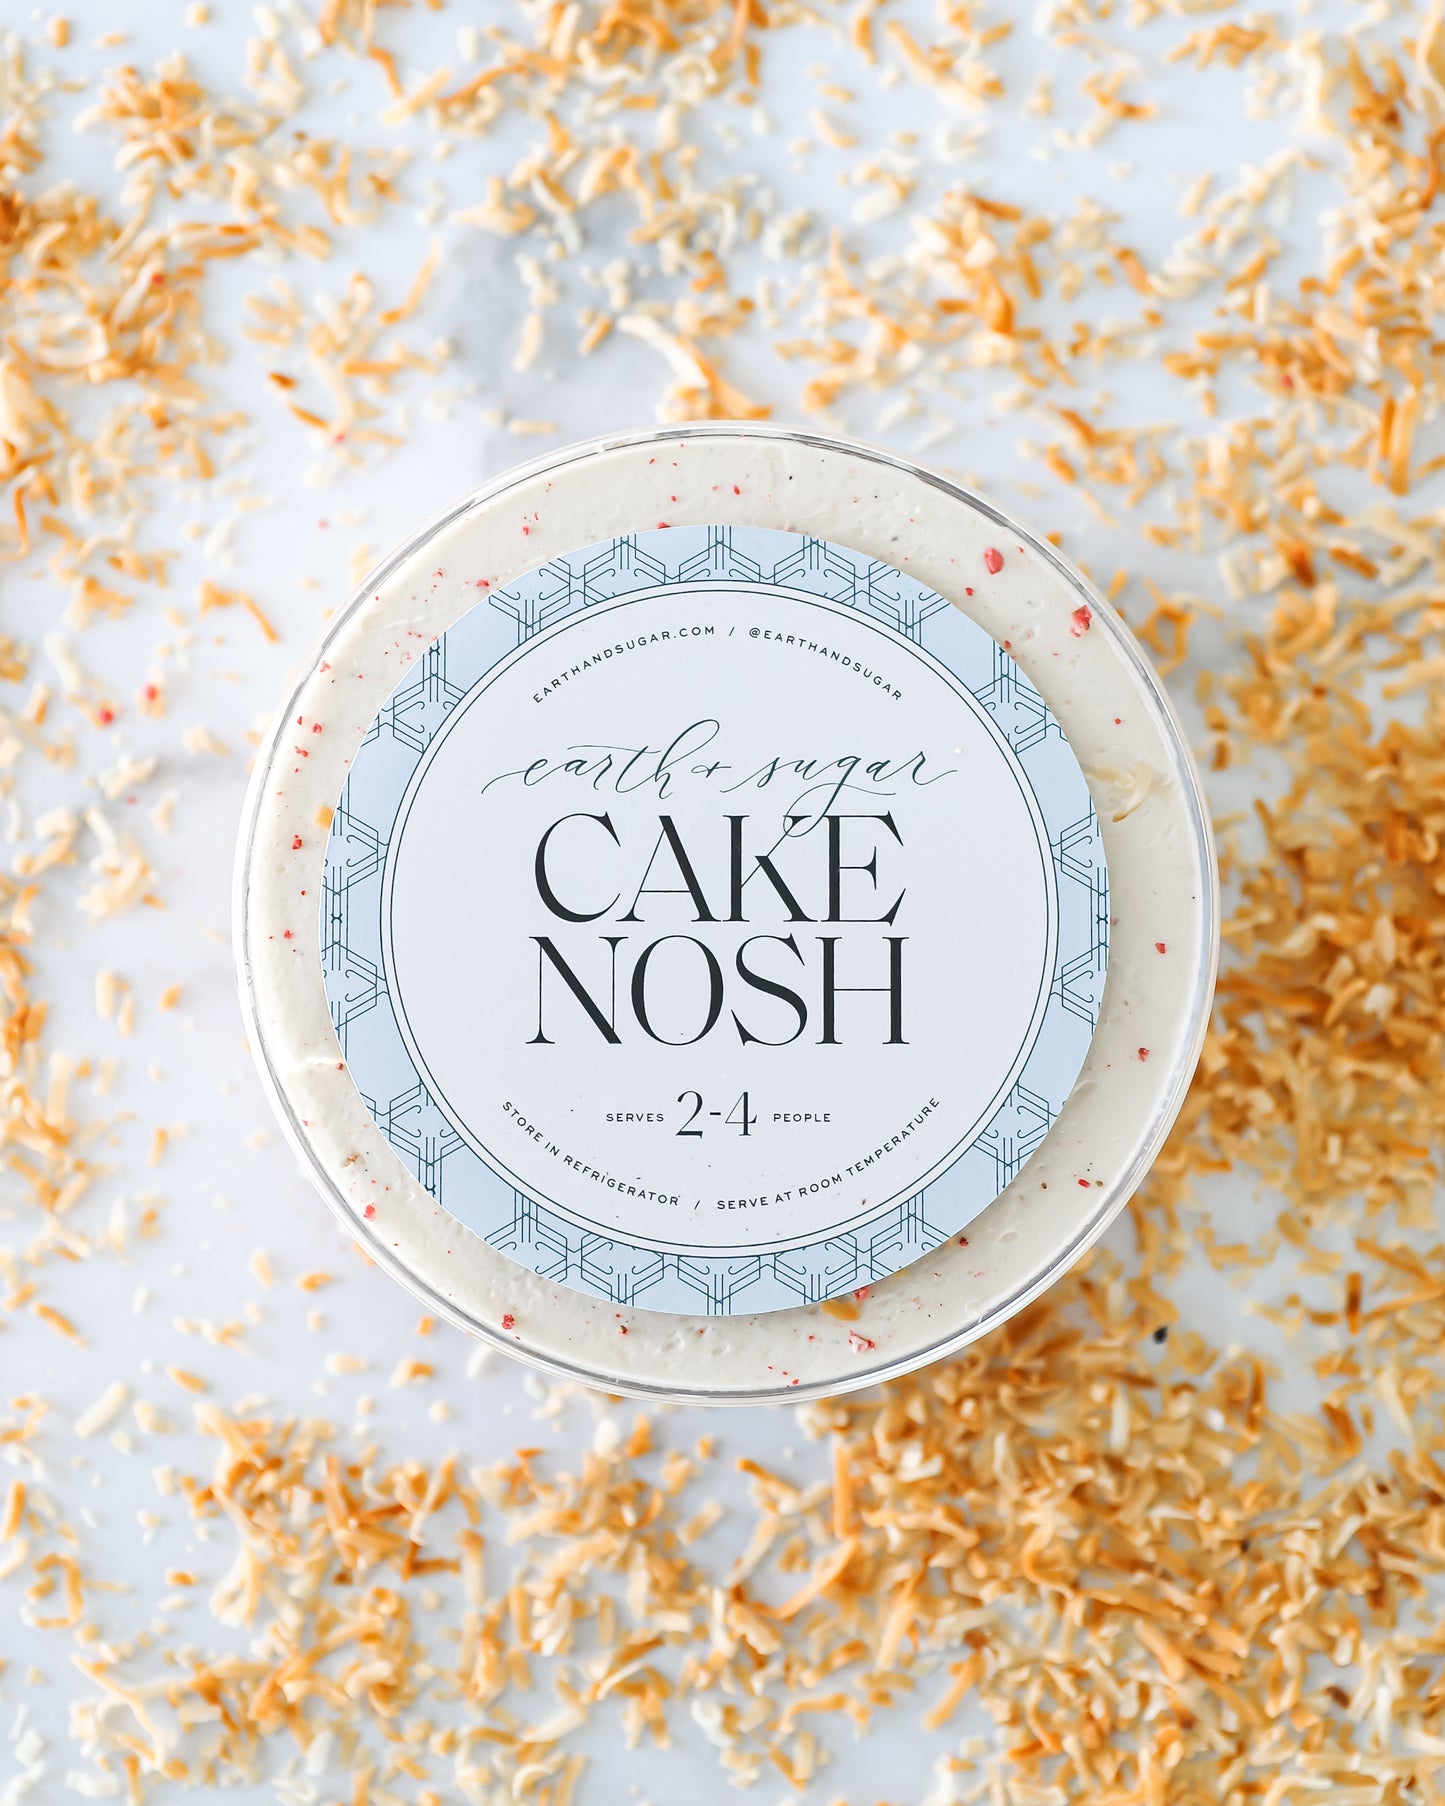 CAKE NOSH